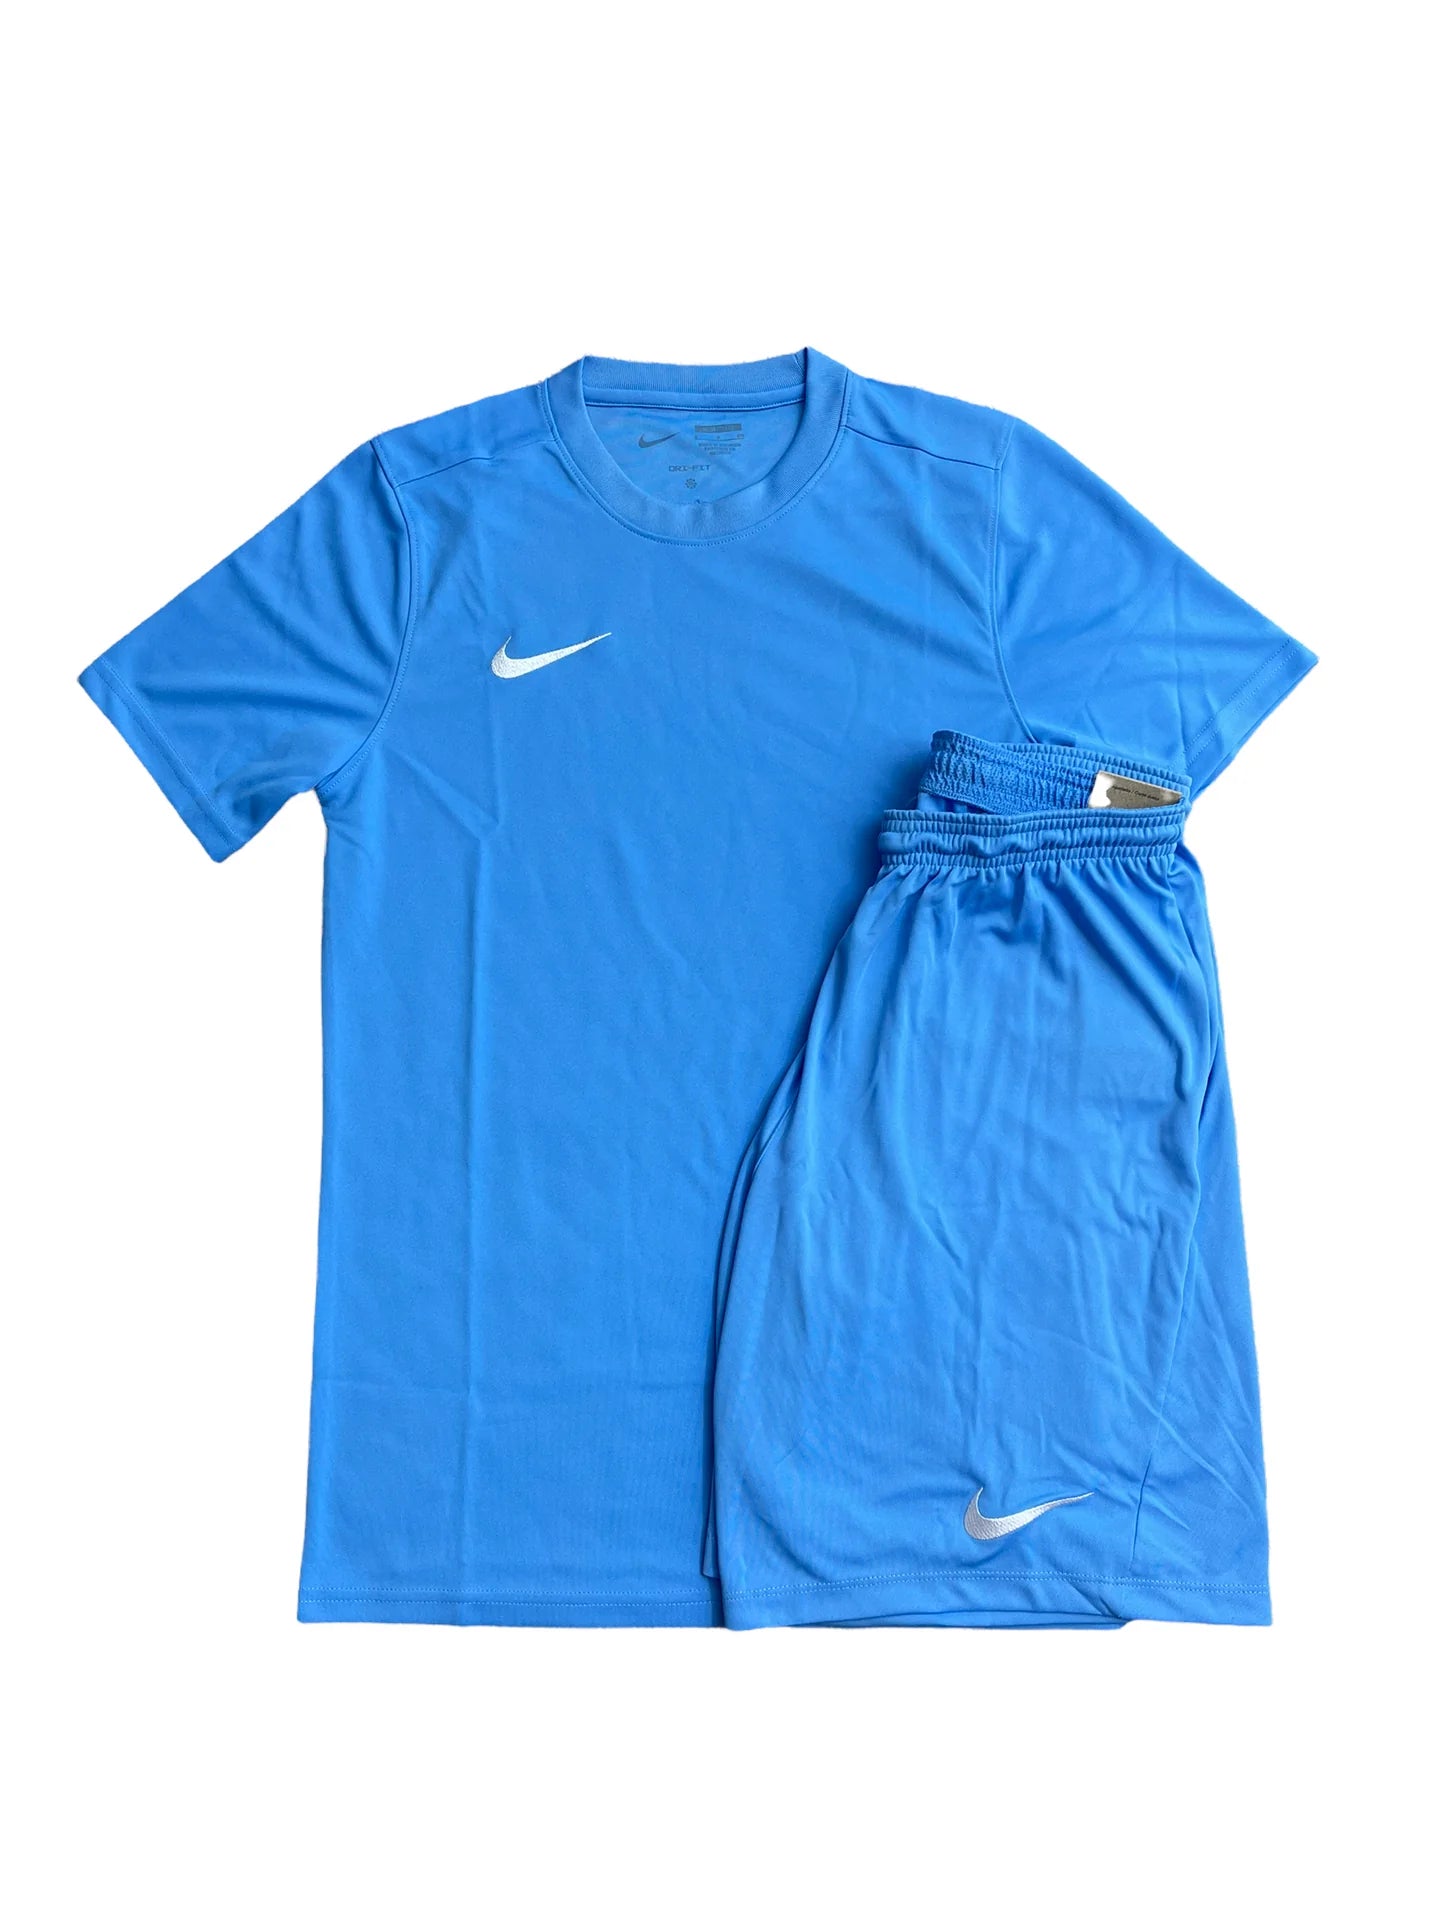 Nike DRIFIT Set Baby blue